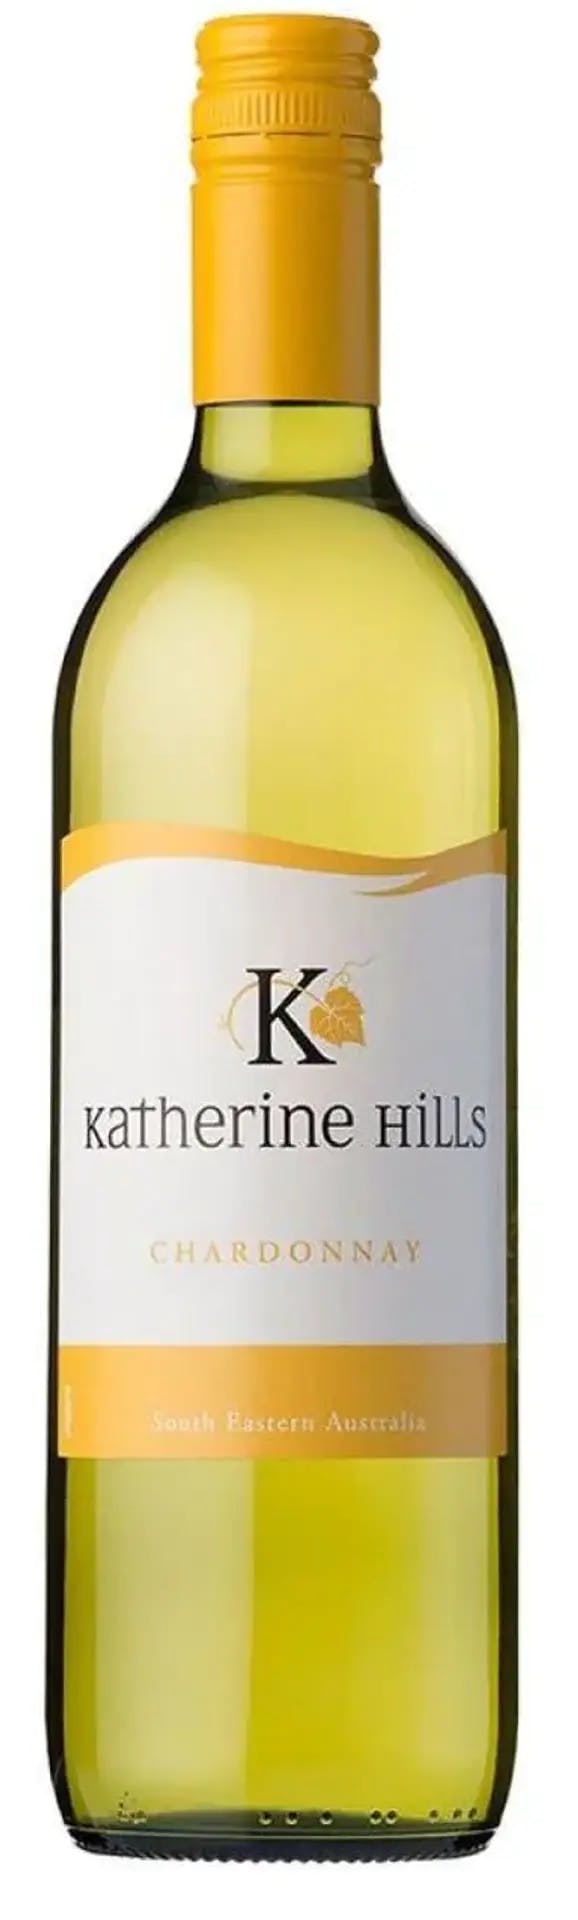 Katherine Hills Chardonnay